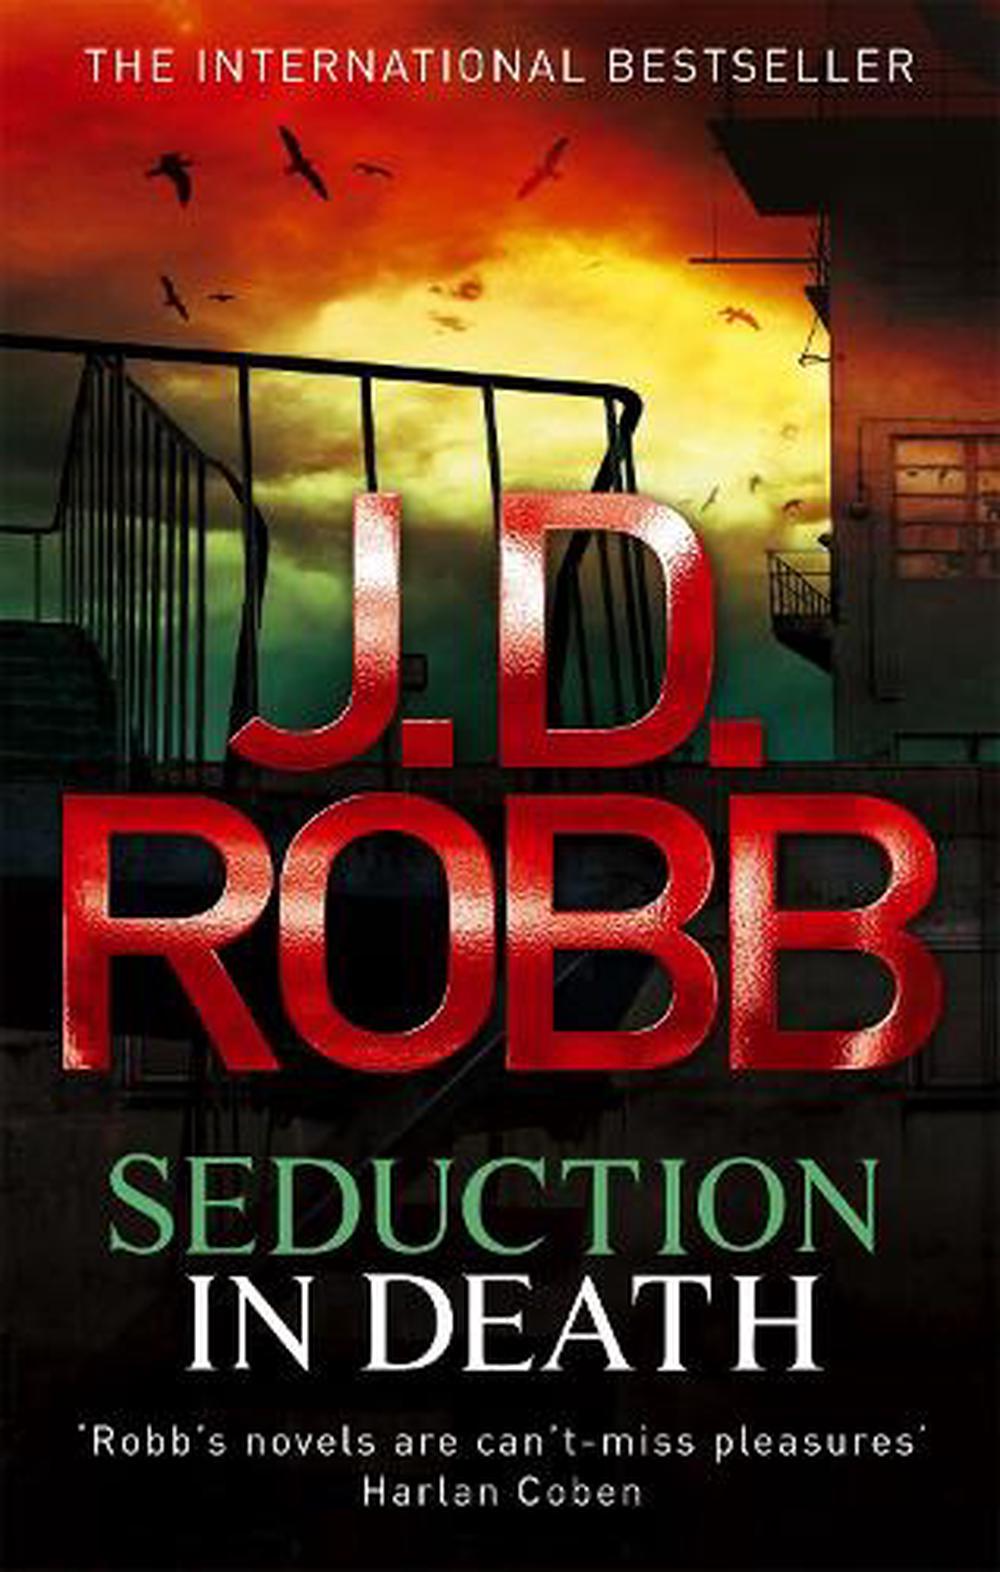 Seduction In Death by J.D. Robb, Paperback, 9780749957292 | Buy online ...